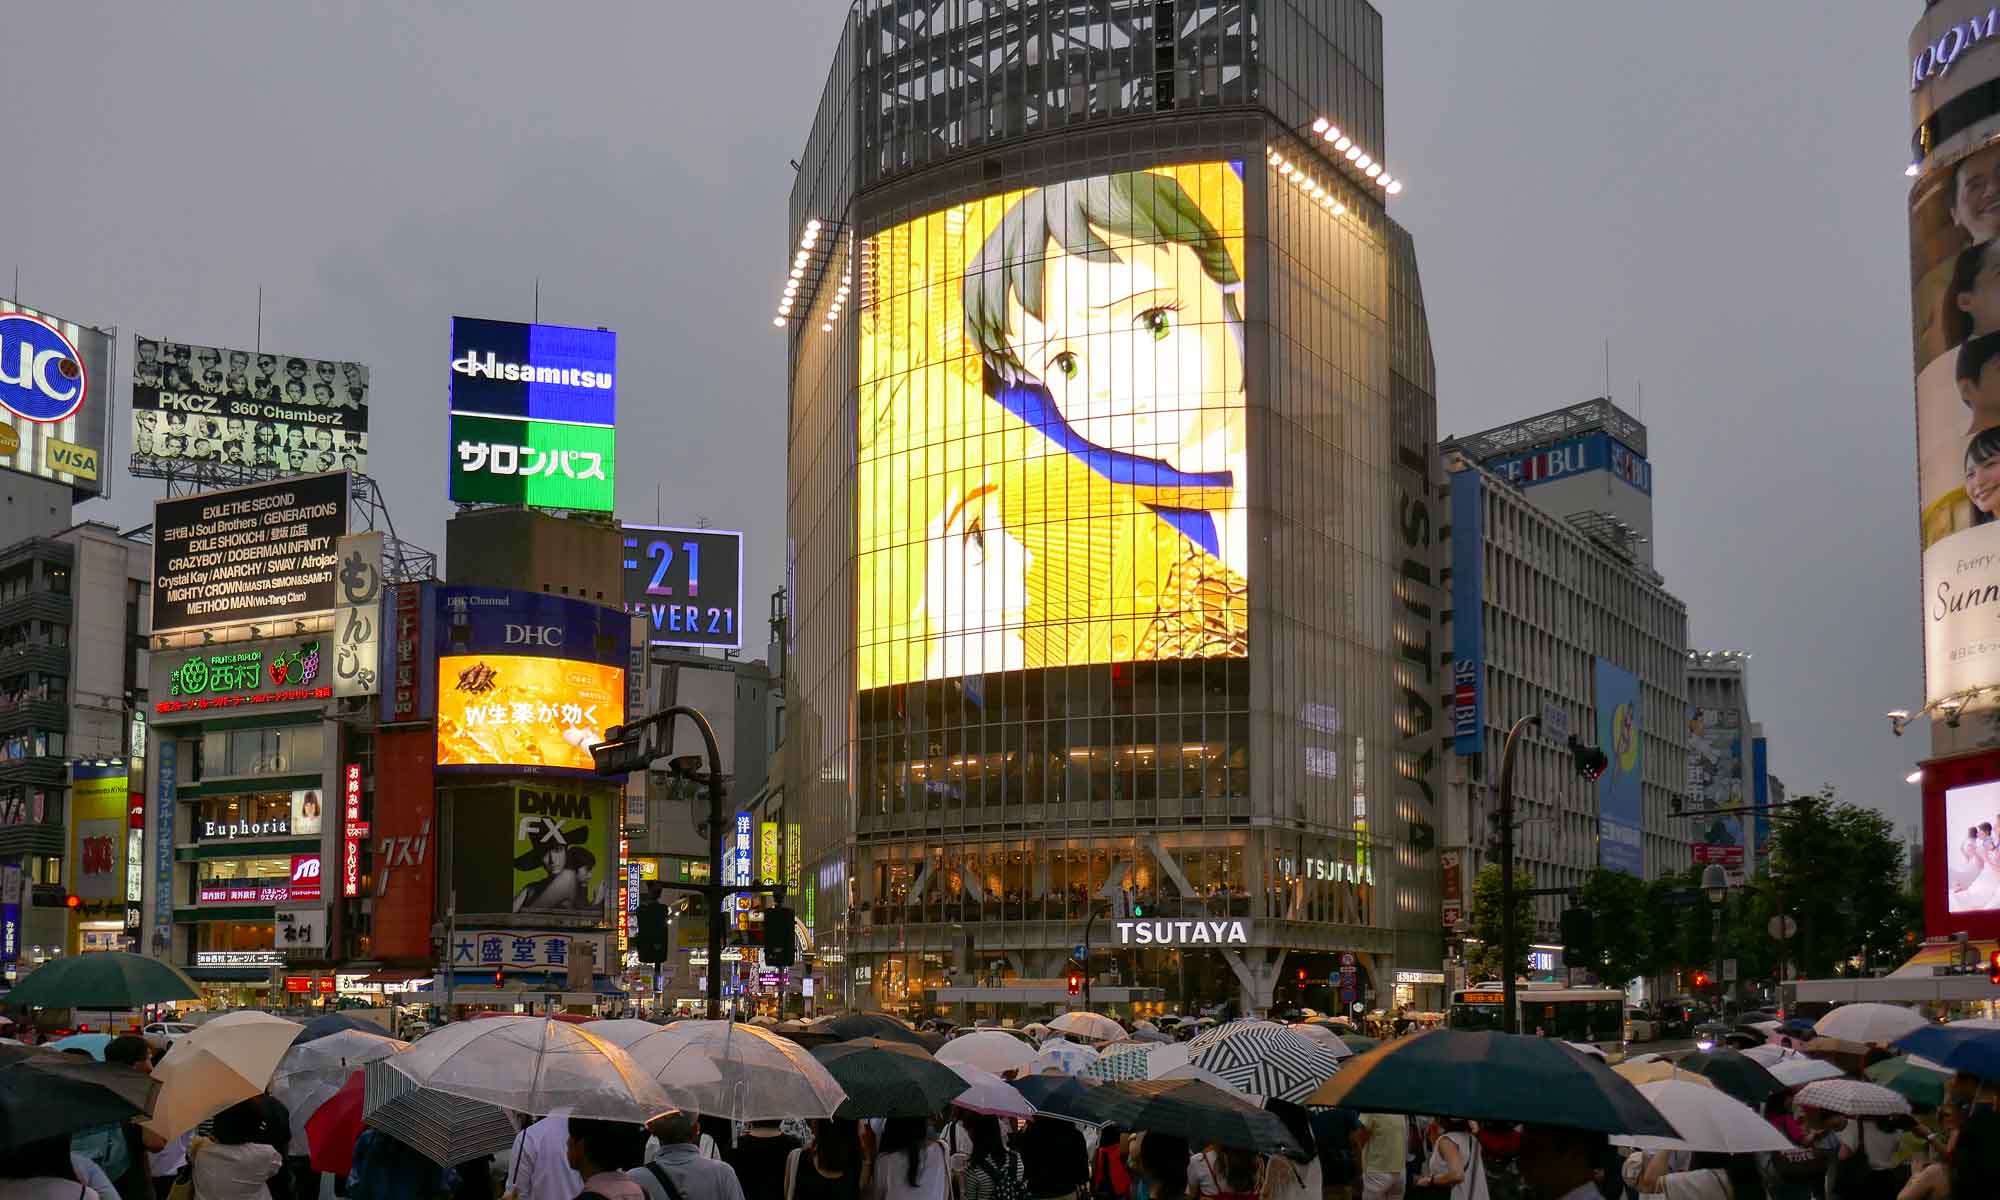 Shibuya Crossing on a rainy afternoon